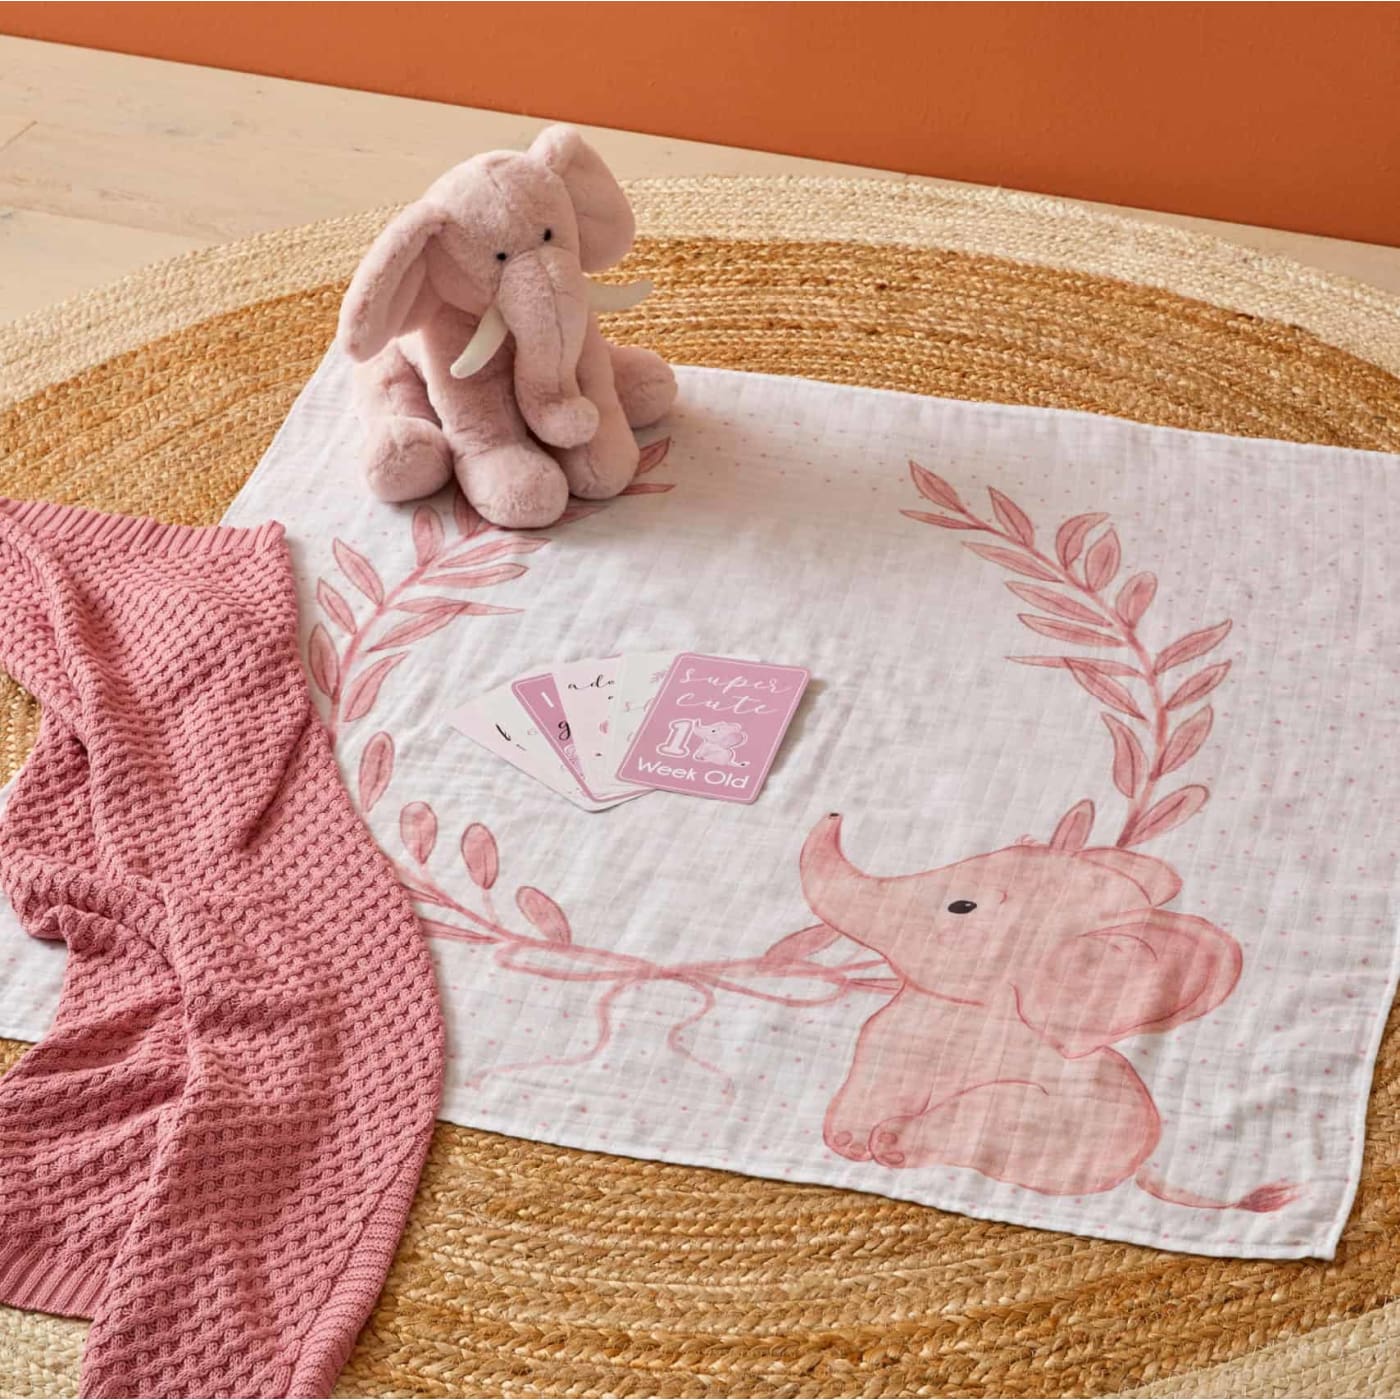 Jiggle & Giggle Milestone Cotton Muslin & Baby Photo Cards - Pink Elephant - Pink Elephant - GIFTWARE - MILESTONE BLOCKS/CARDS